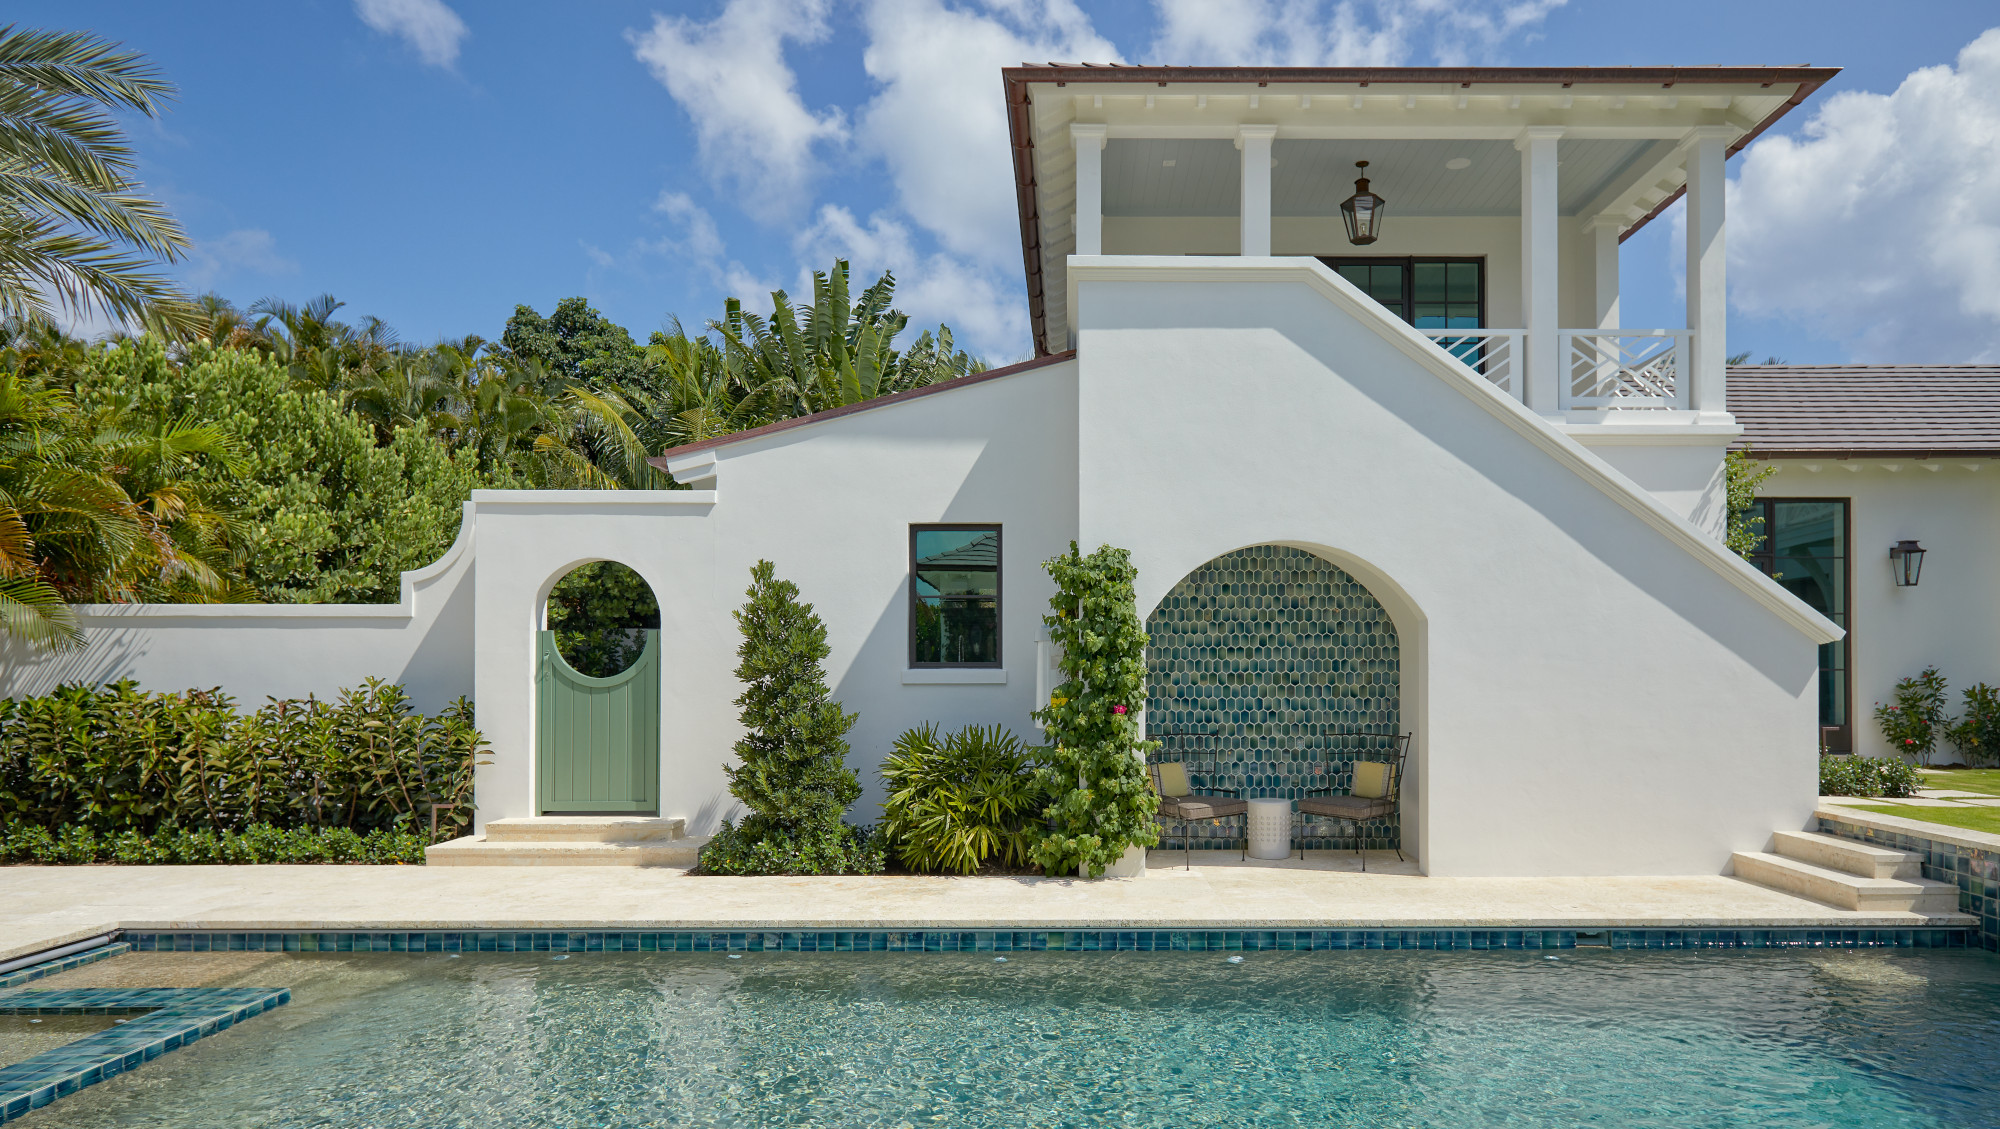 Caribbean style pool house